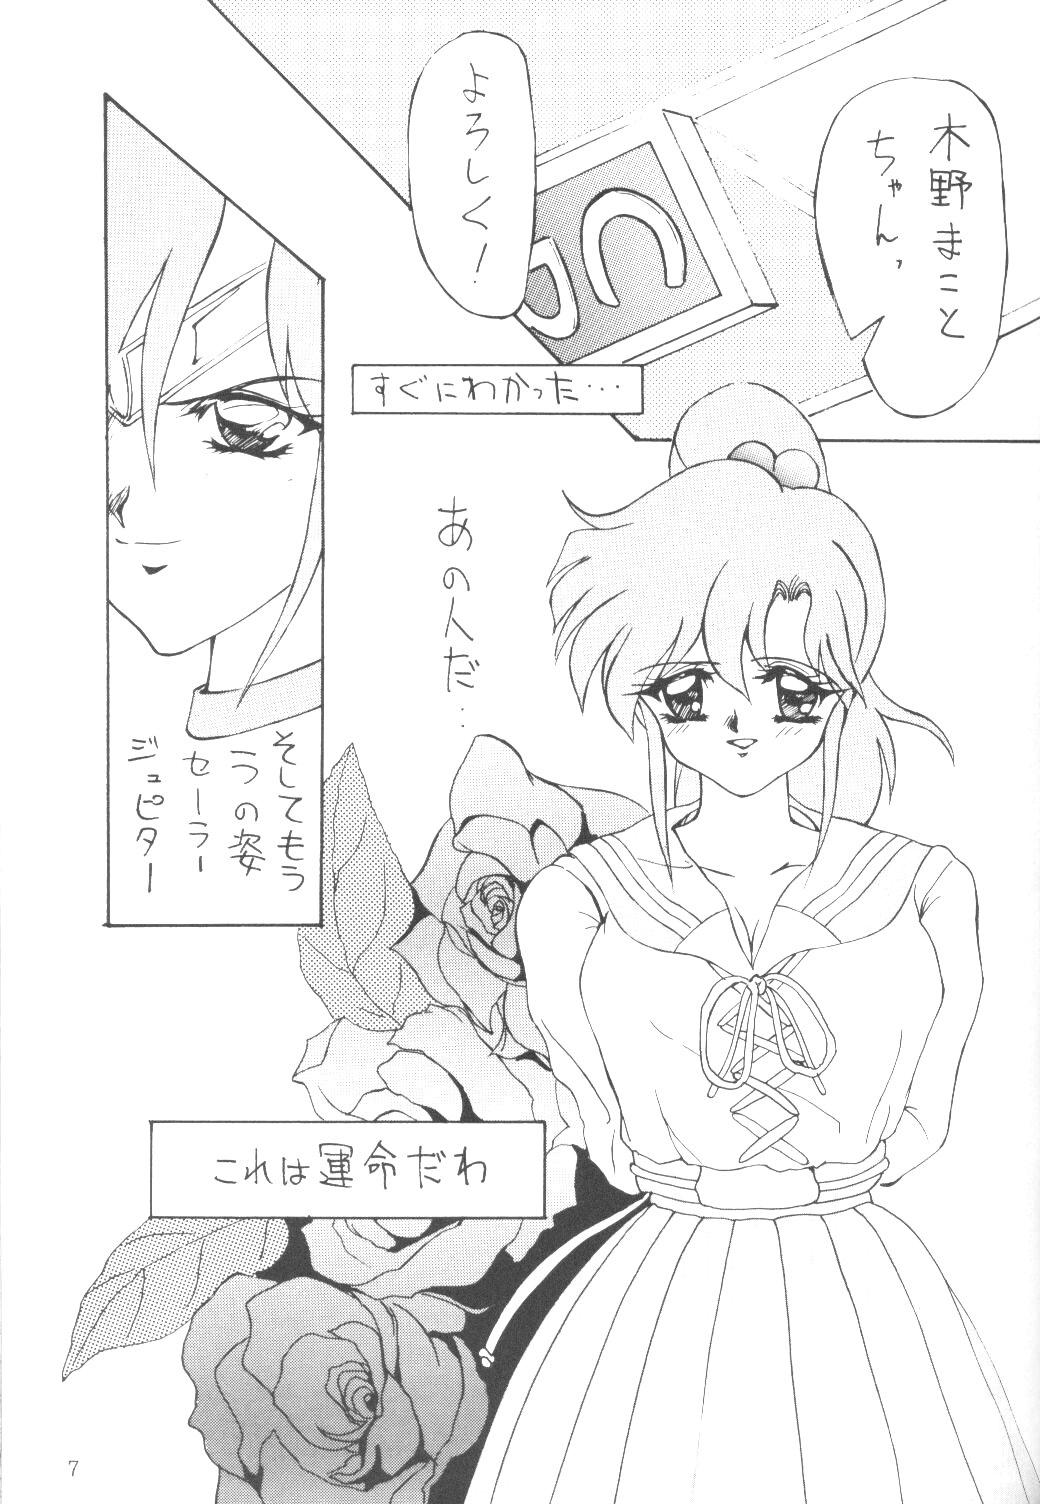 Ex Girlfriend ALIVE AMI LOST - Sailor moon Male - Page 6